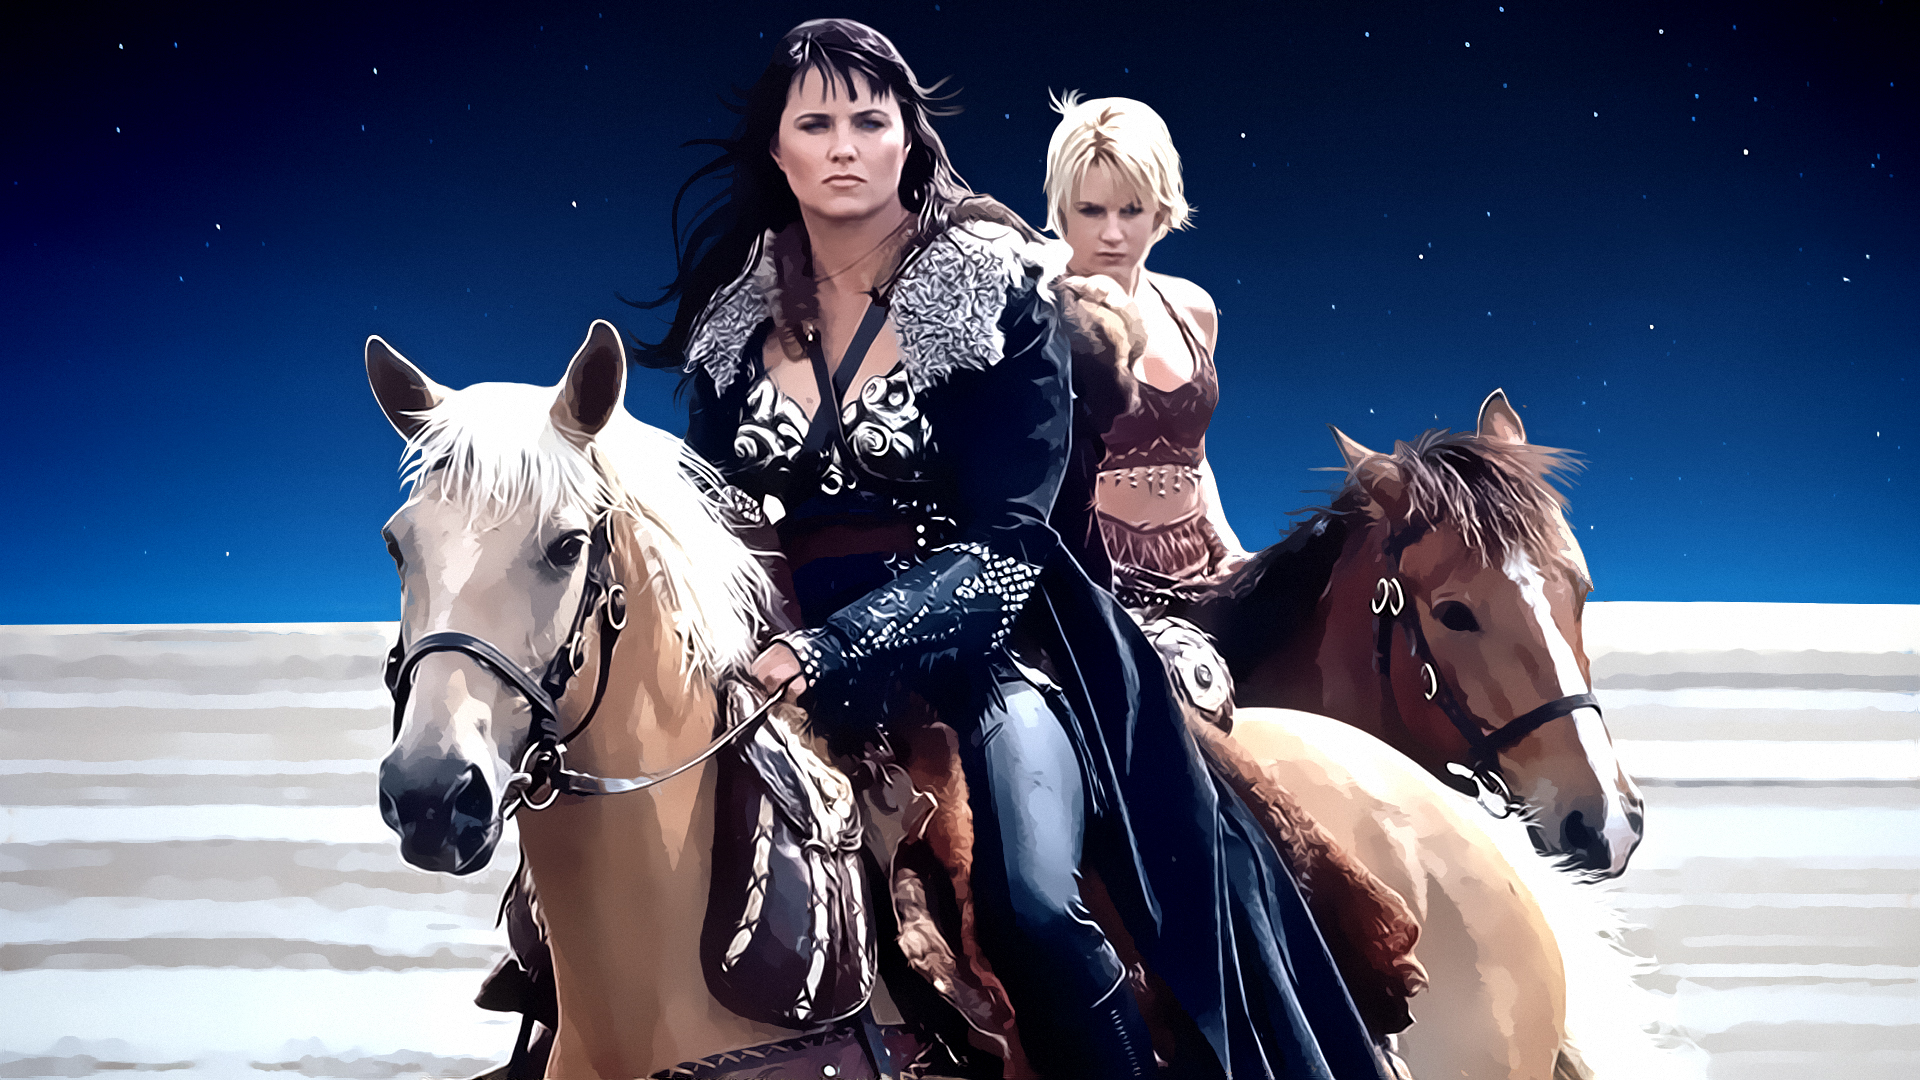 Desert Fantasy Gabrielle Xena Warrior Princess Lucy Lawless Renee O 039 Connor Woman Warrior